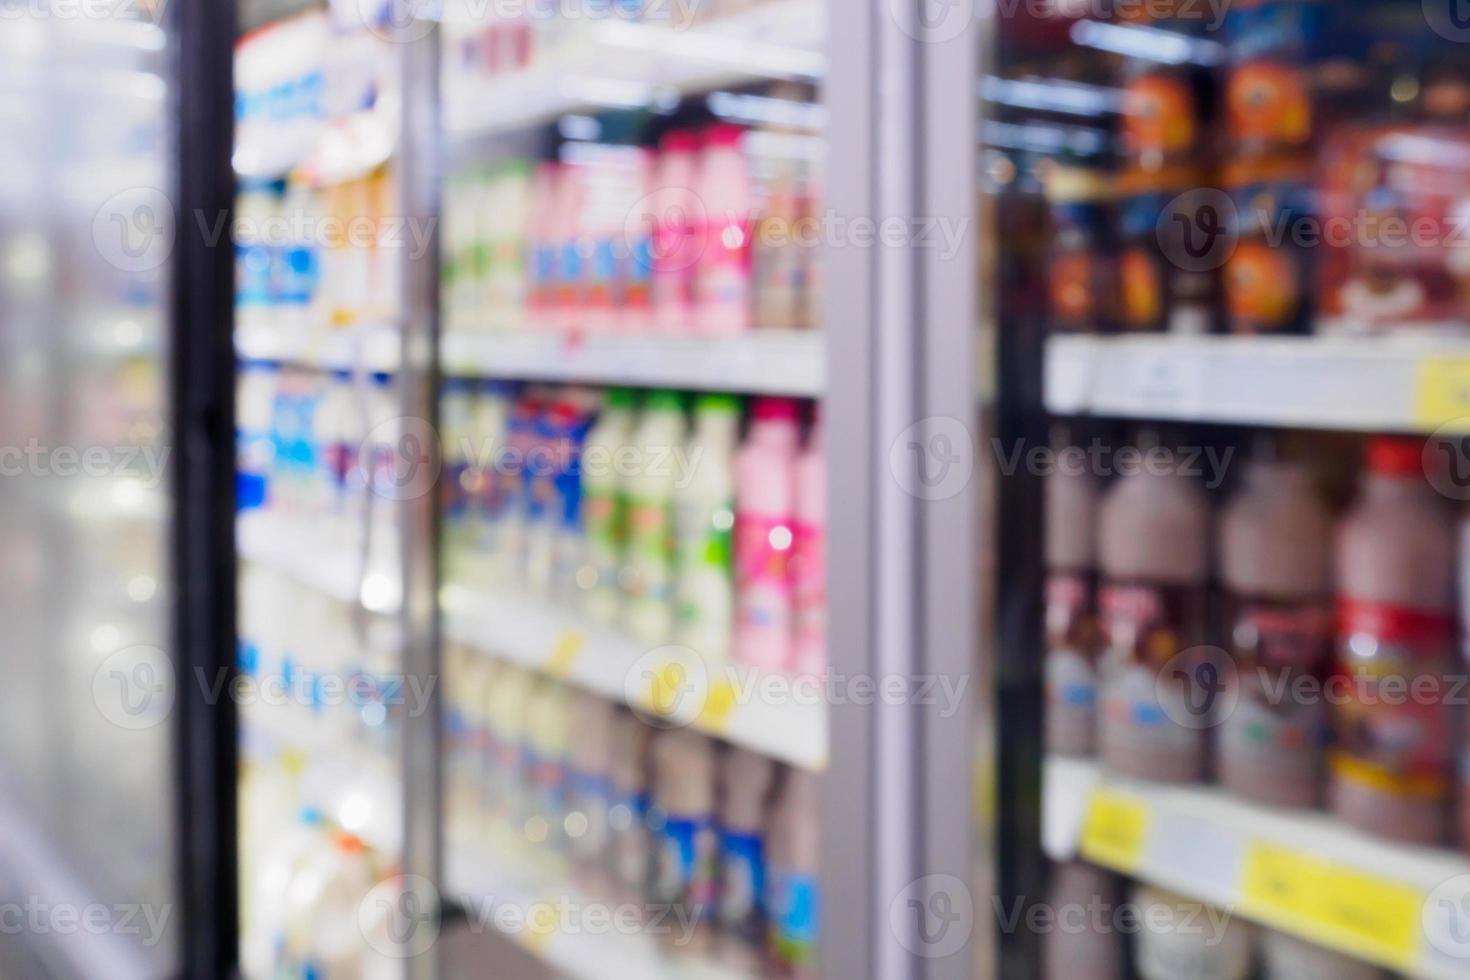 borrar garrafas de leite de produtos lácteos na prateleira da geladeira no supermercado foto